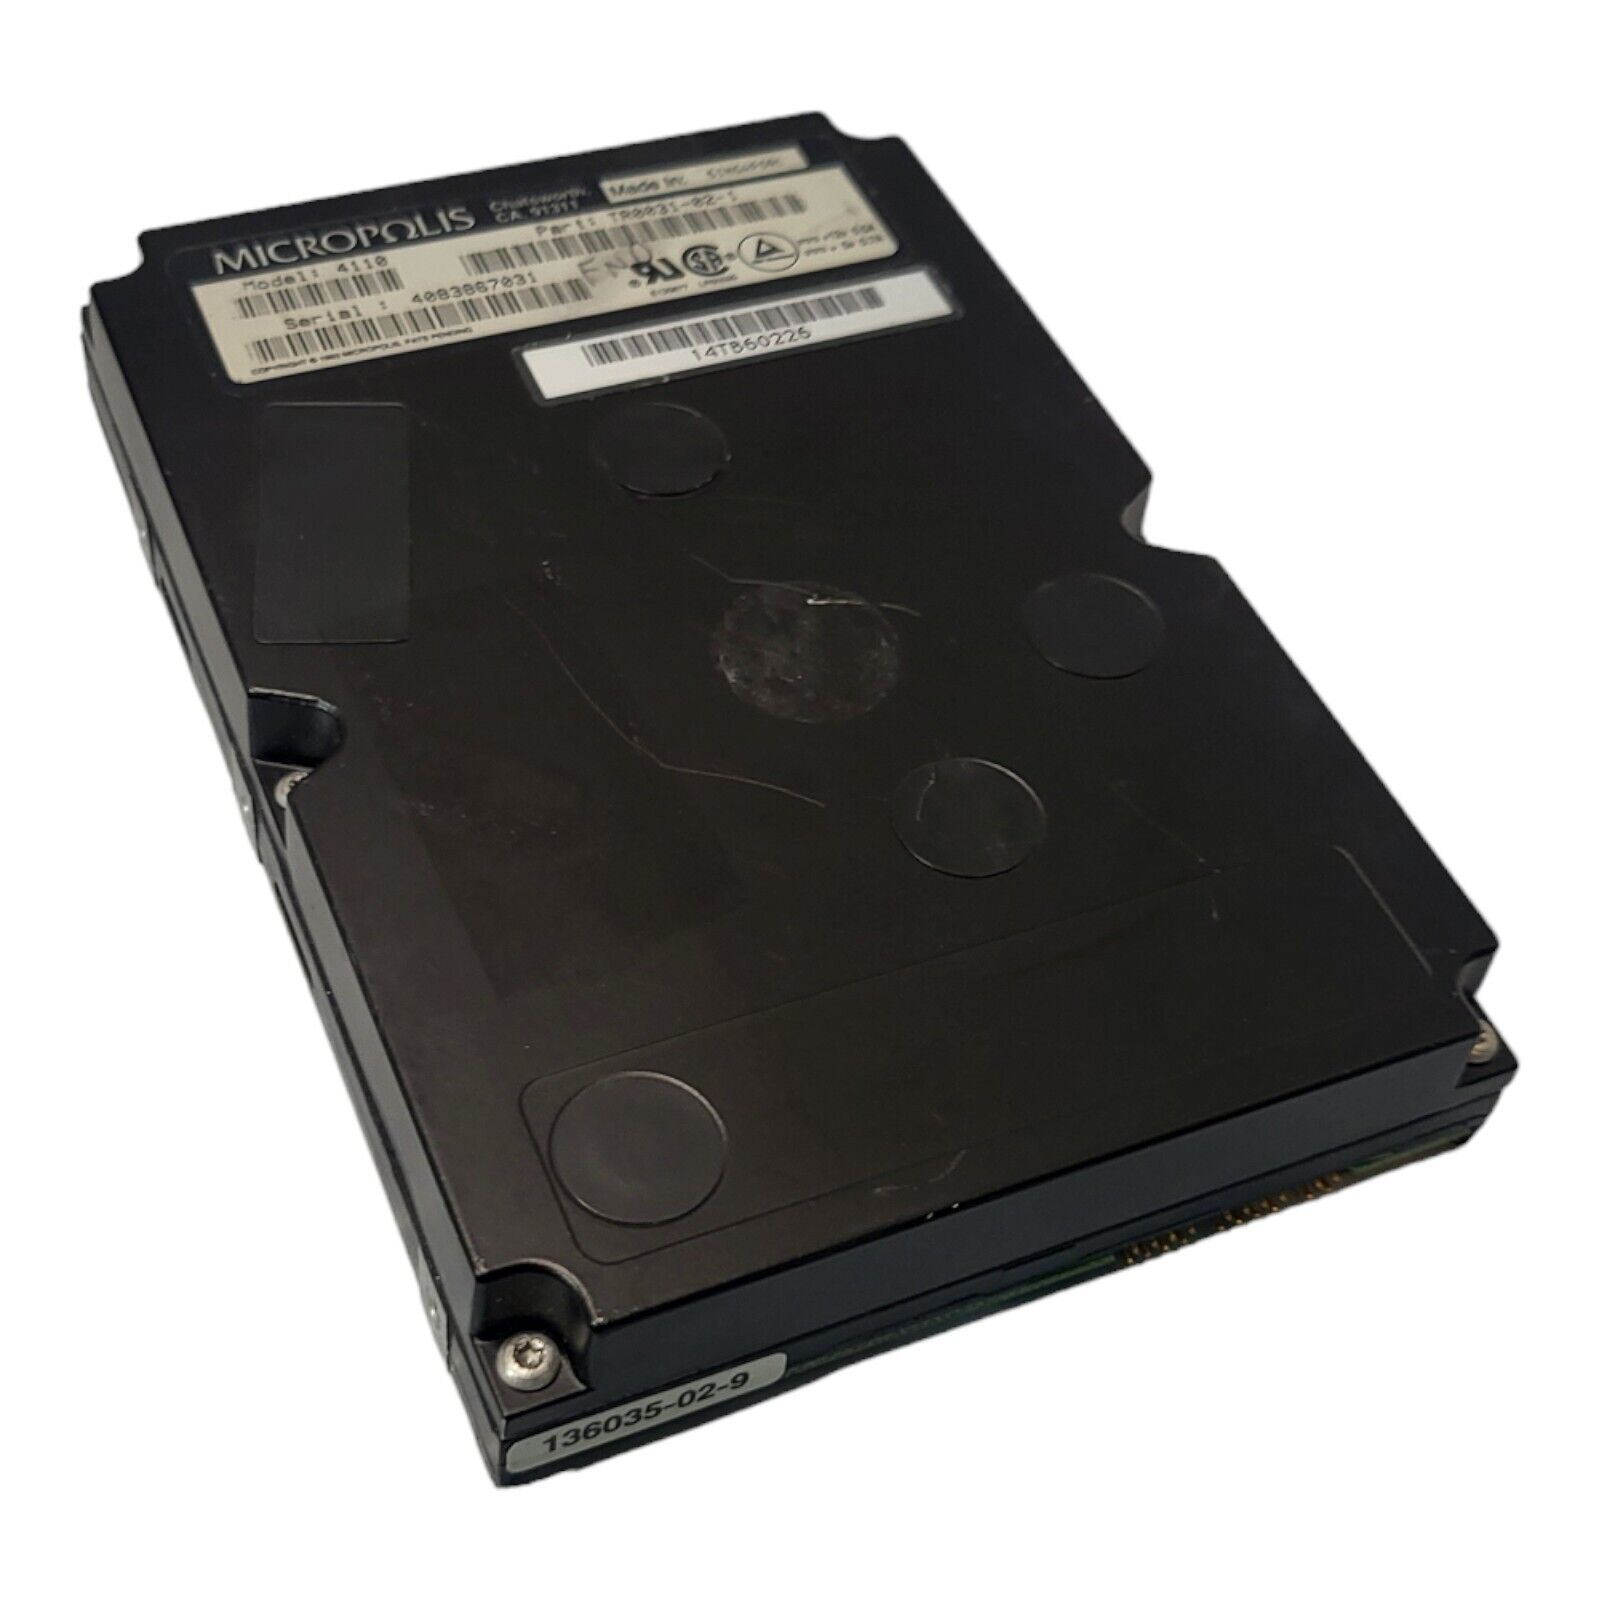 Vintage MicroPolis 4110 1GB SCSI 50 Pin 3.5-Inch Internal Hard Drive - UNTESTED